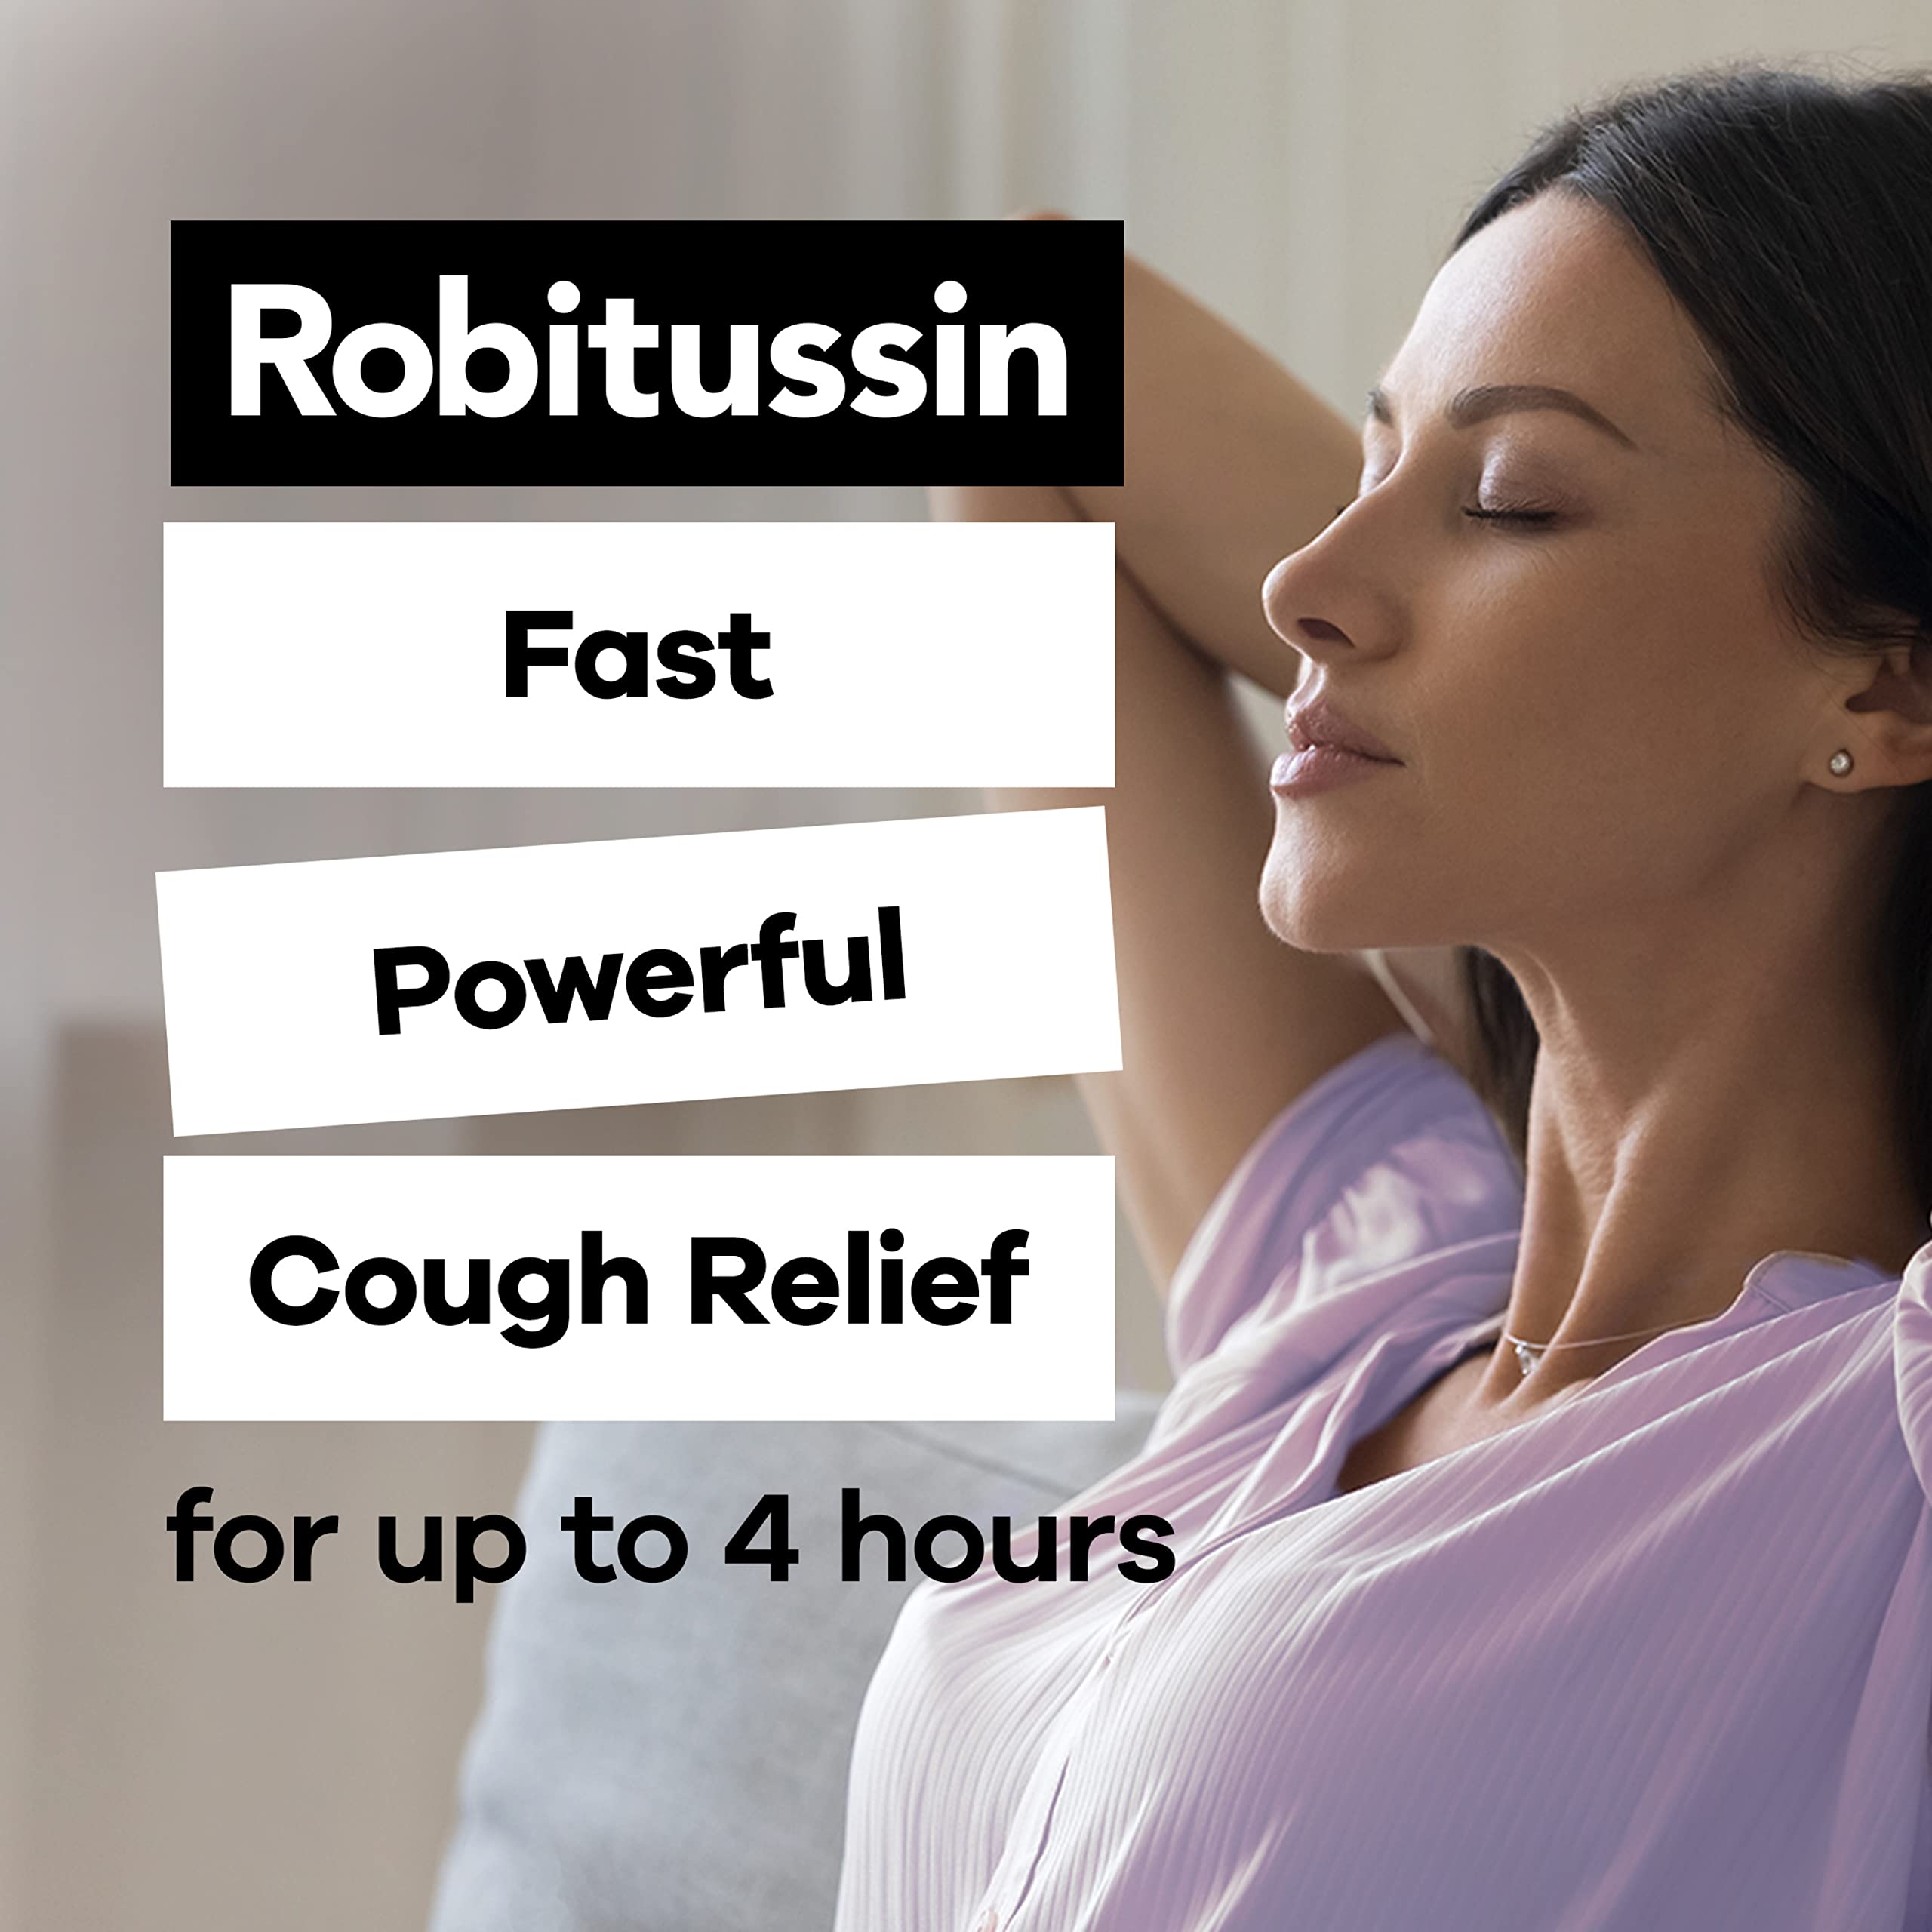 Robitussin Maximum Strength Elderberry Cough Plus Chest Congestion DM, Cough Suppressant for Adults, Providing Non Drowsy Liquid Cough and Chest Congestion Relief - 2x8 Fl Oz